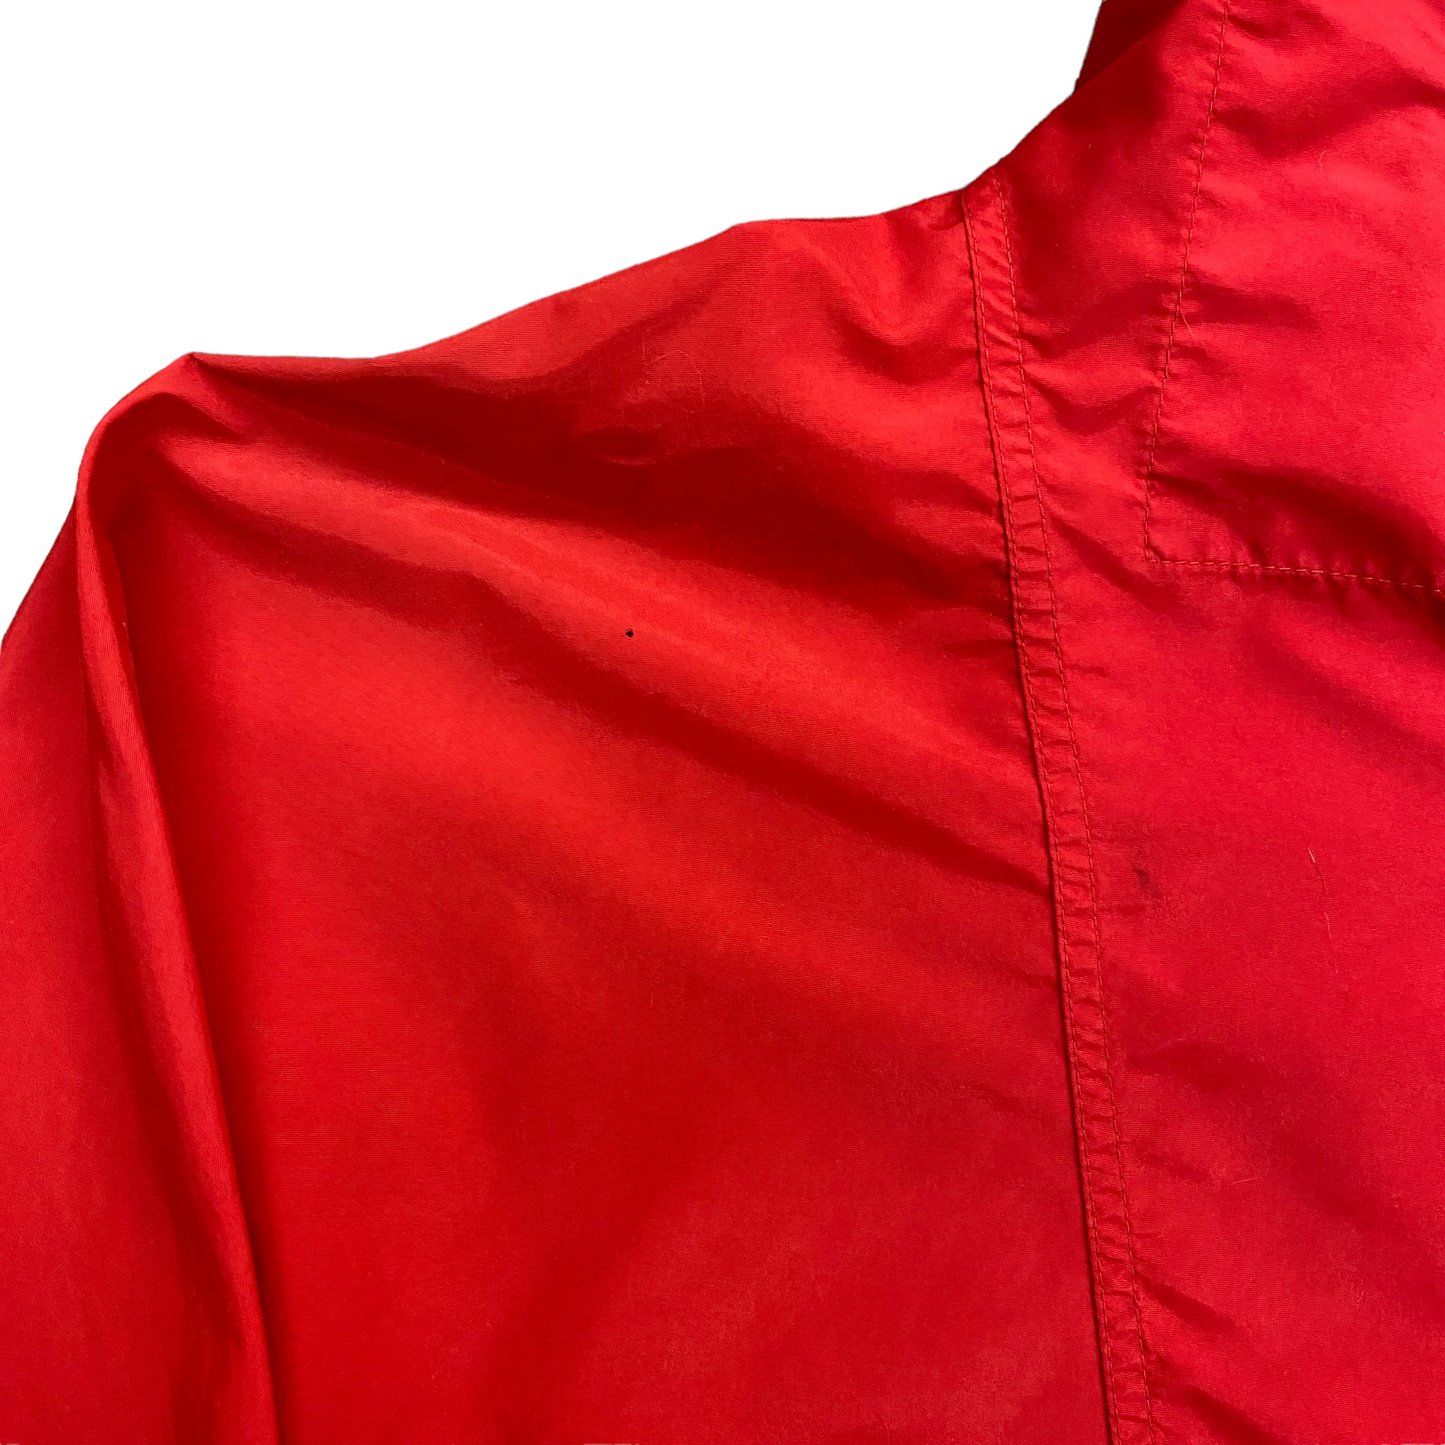 Vintage 90s LL Bean Red Anorak Windbreaker Jacket - Size XL